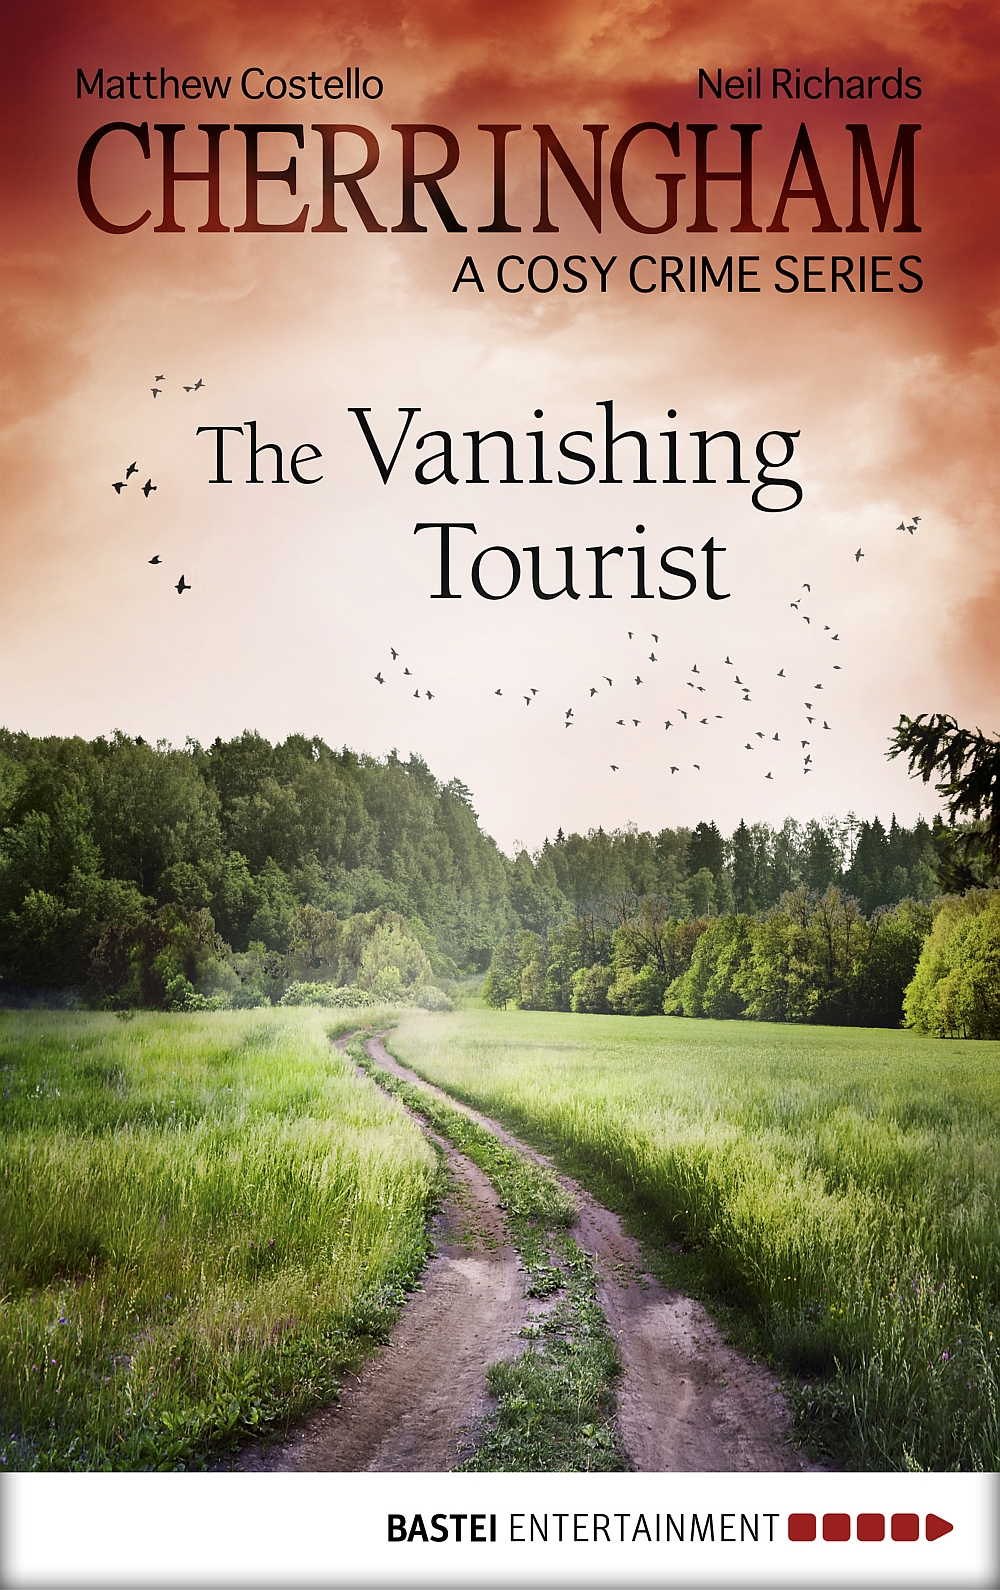 Cherringham--The Vanishing Tourist (2015) by Neil Richards